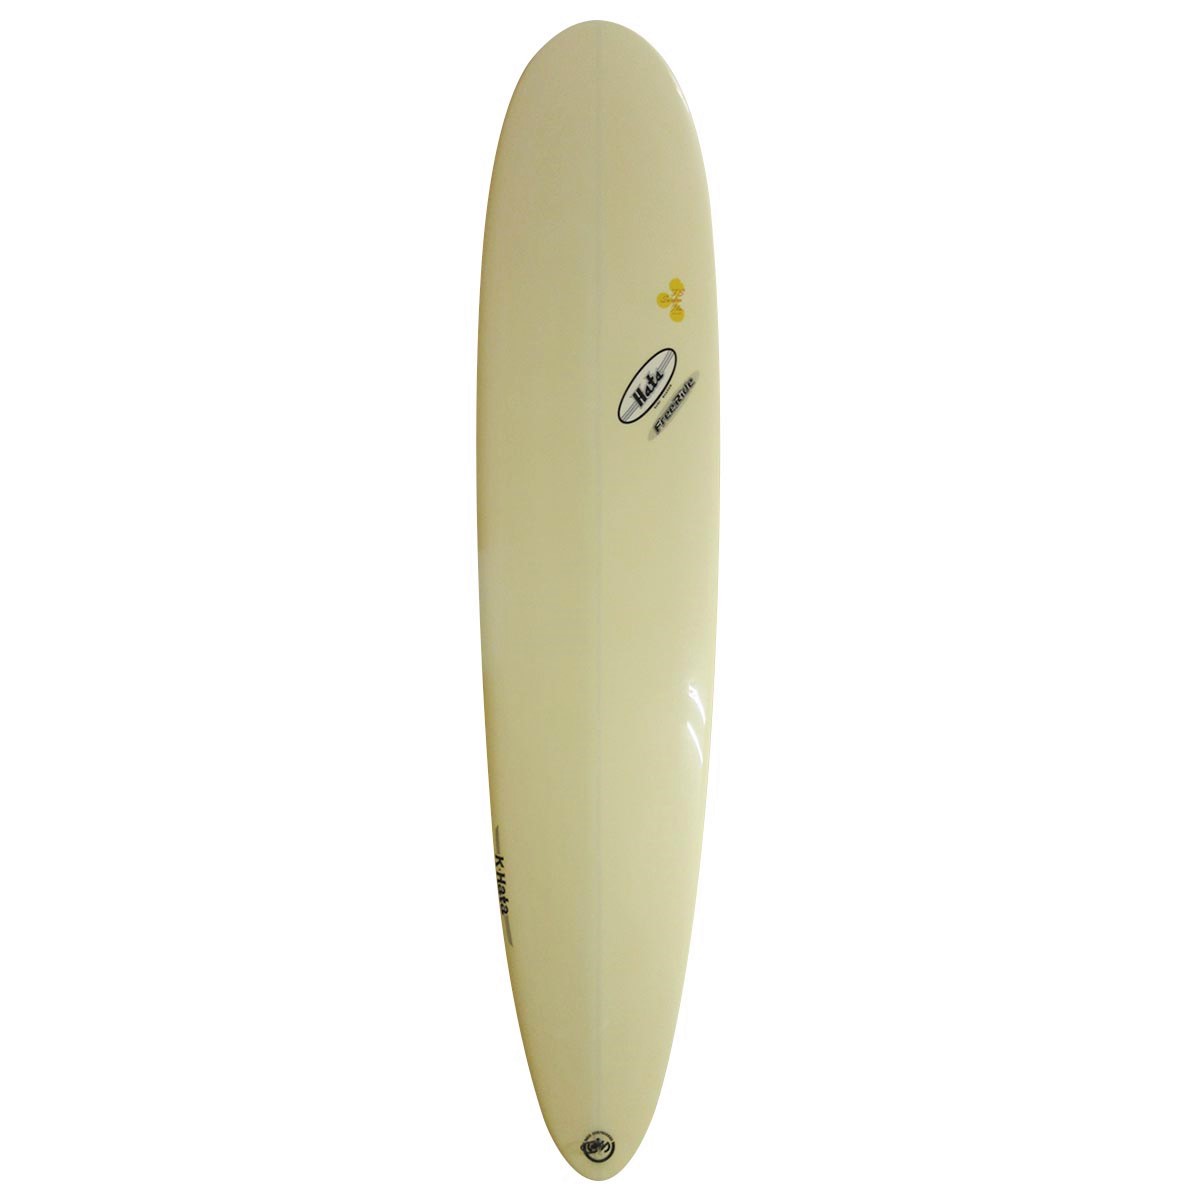 HATA SURFBOARDS / 9`1 Custom shaped by Kunio Hata